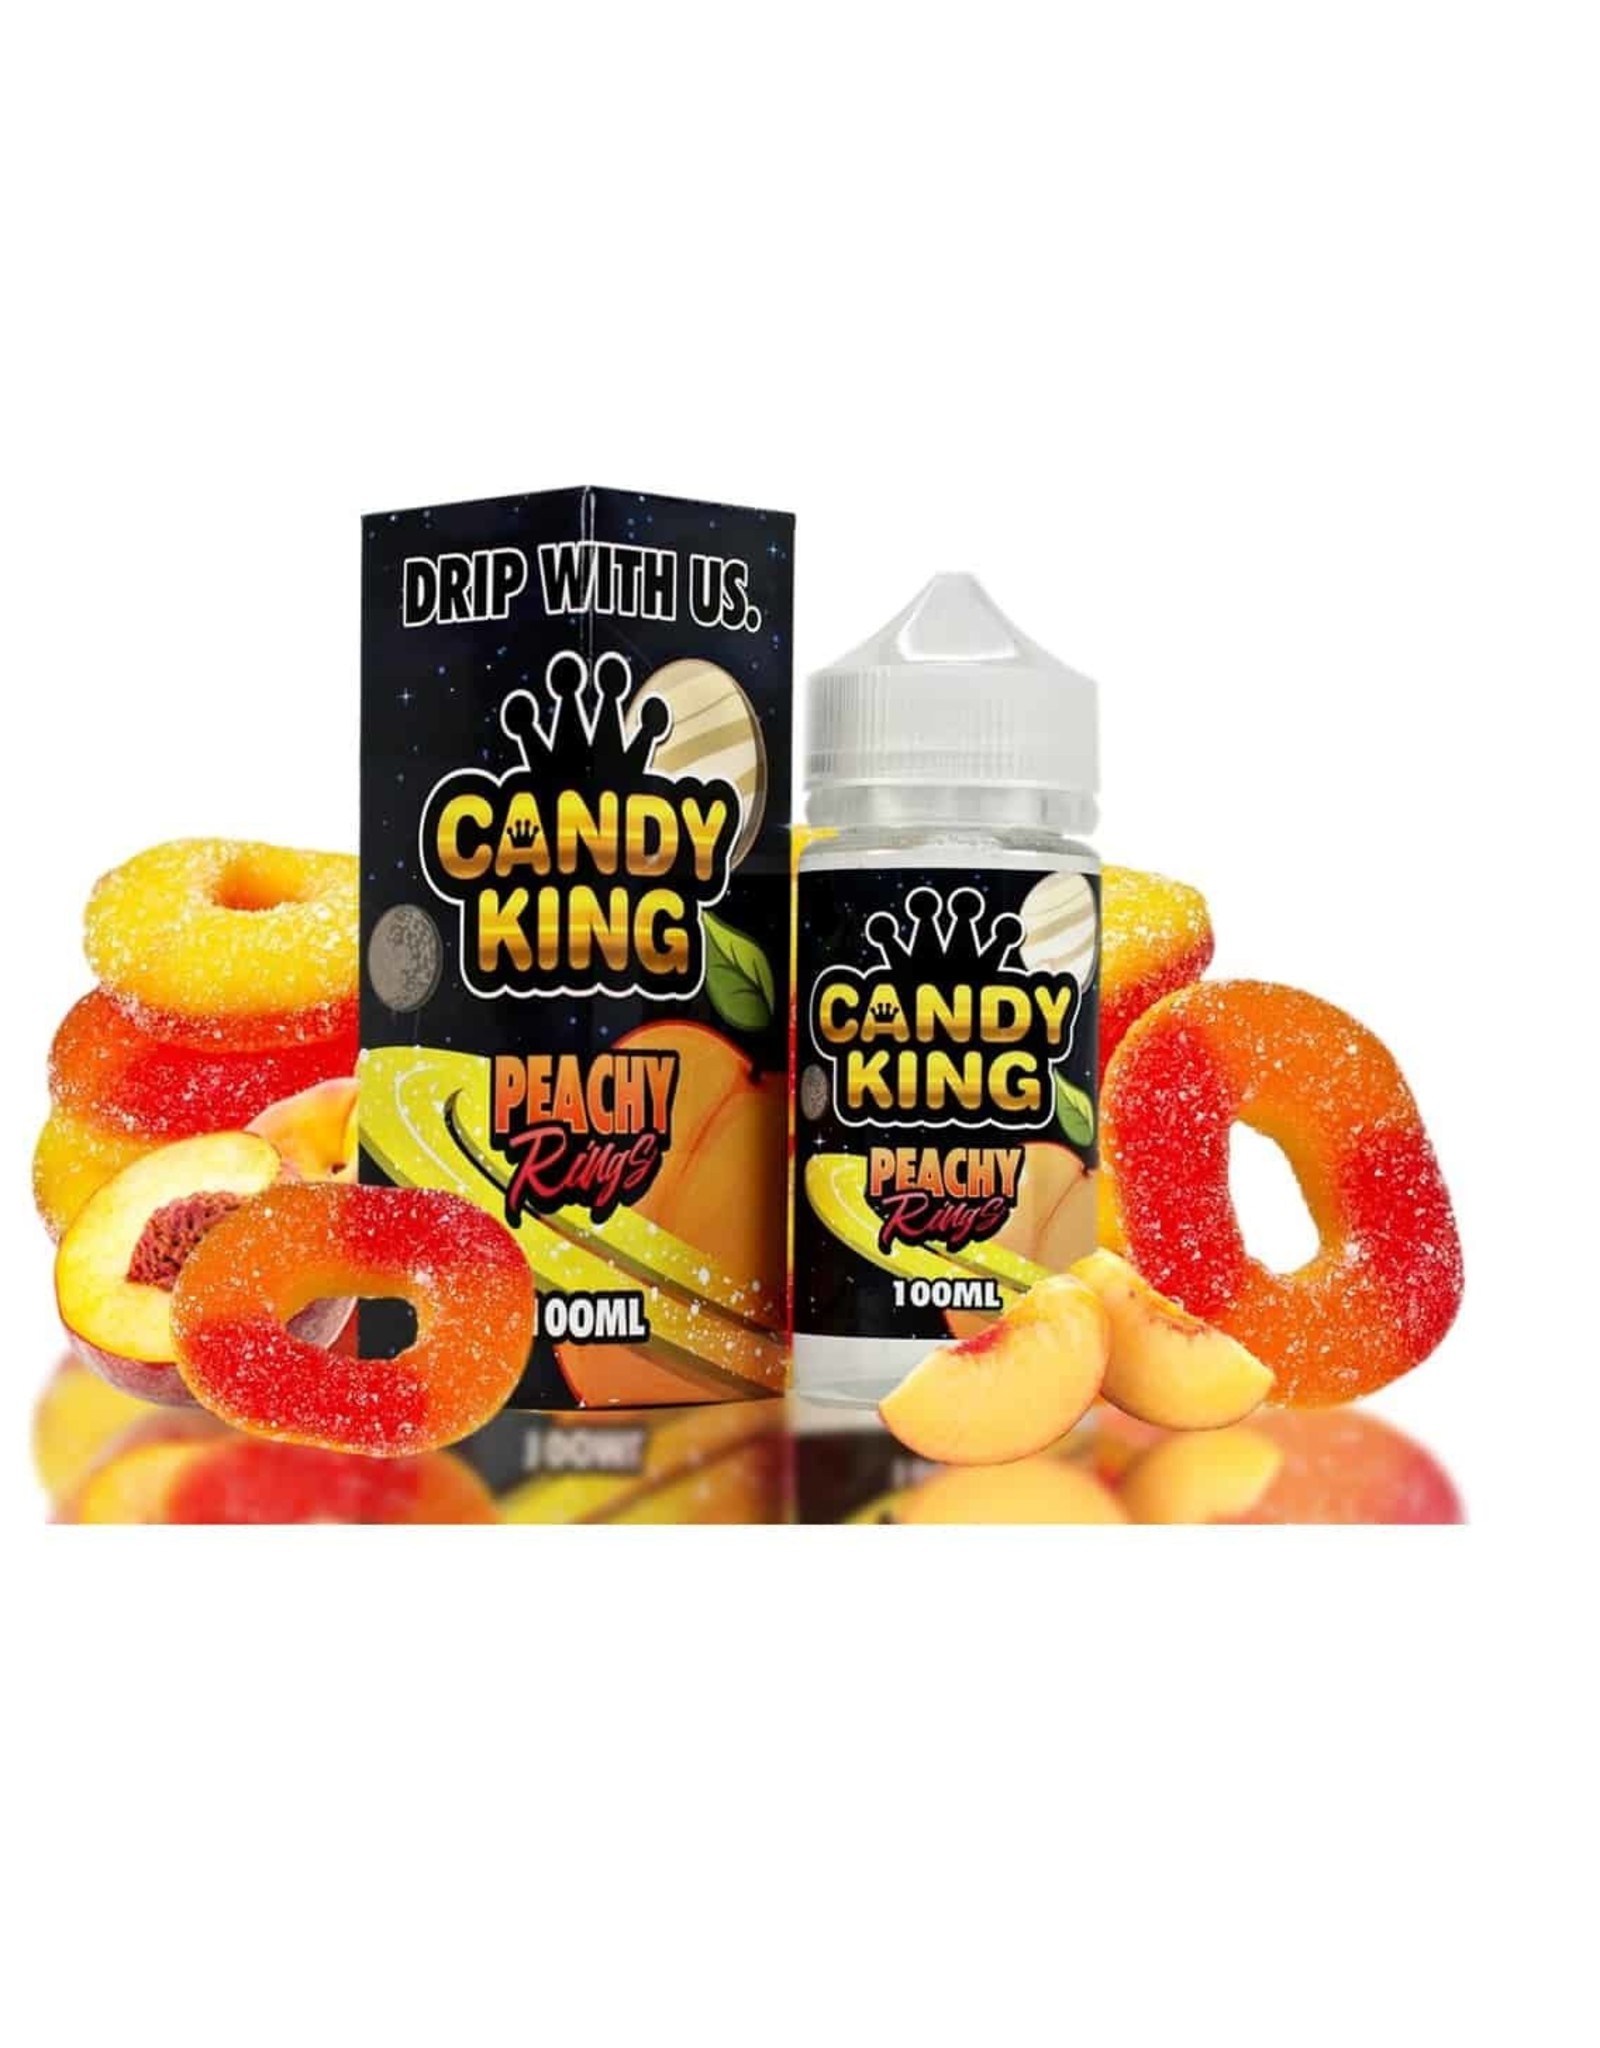 Candy King Candy King Peachy Rings 100 mL 6 mg